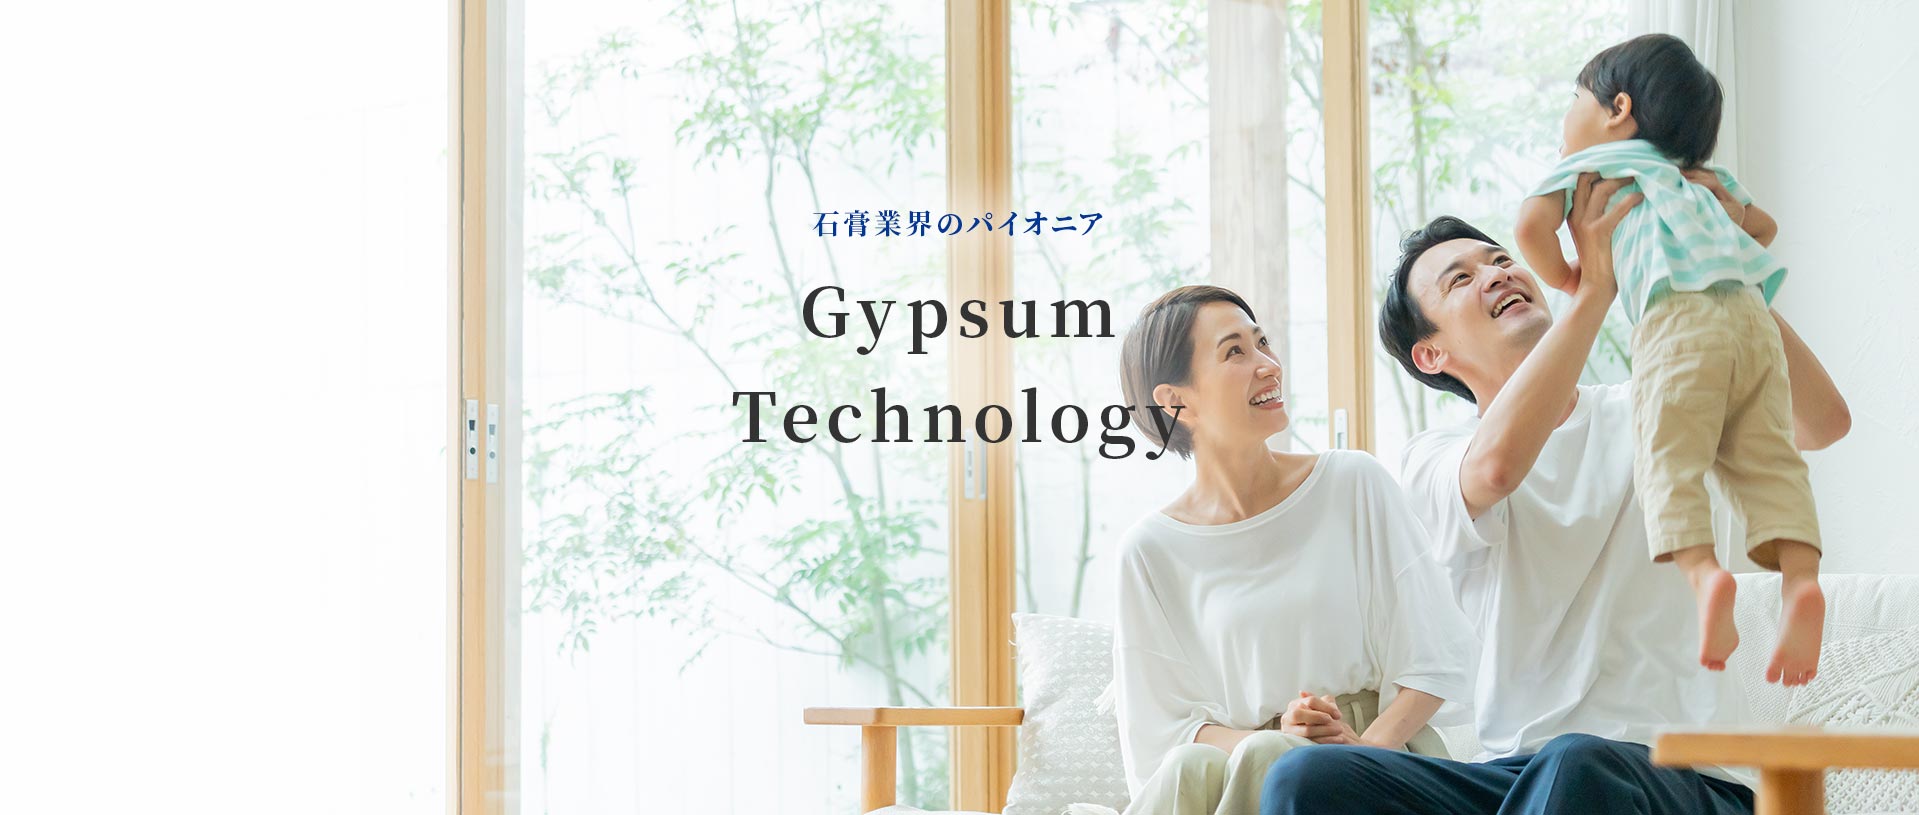 Gypsum Technology